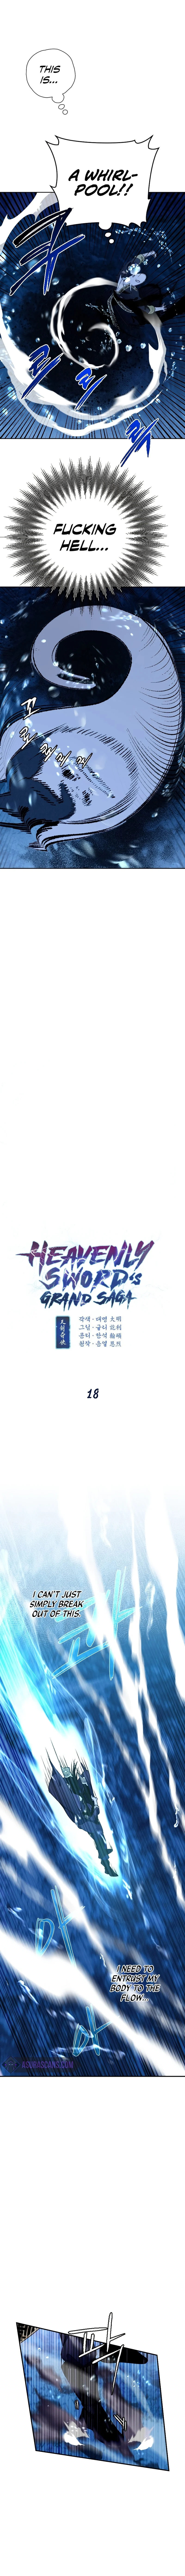 Heavenly Sword’s Grand Saga - Chapter 18 Page 1